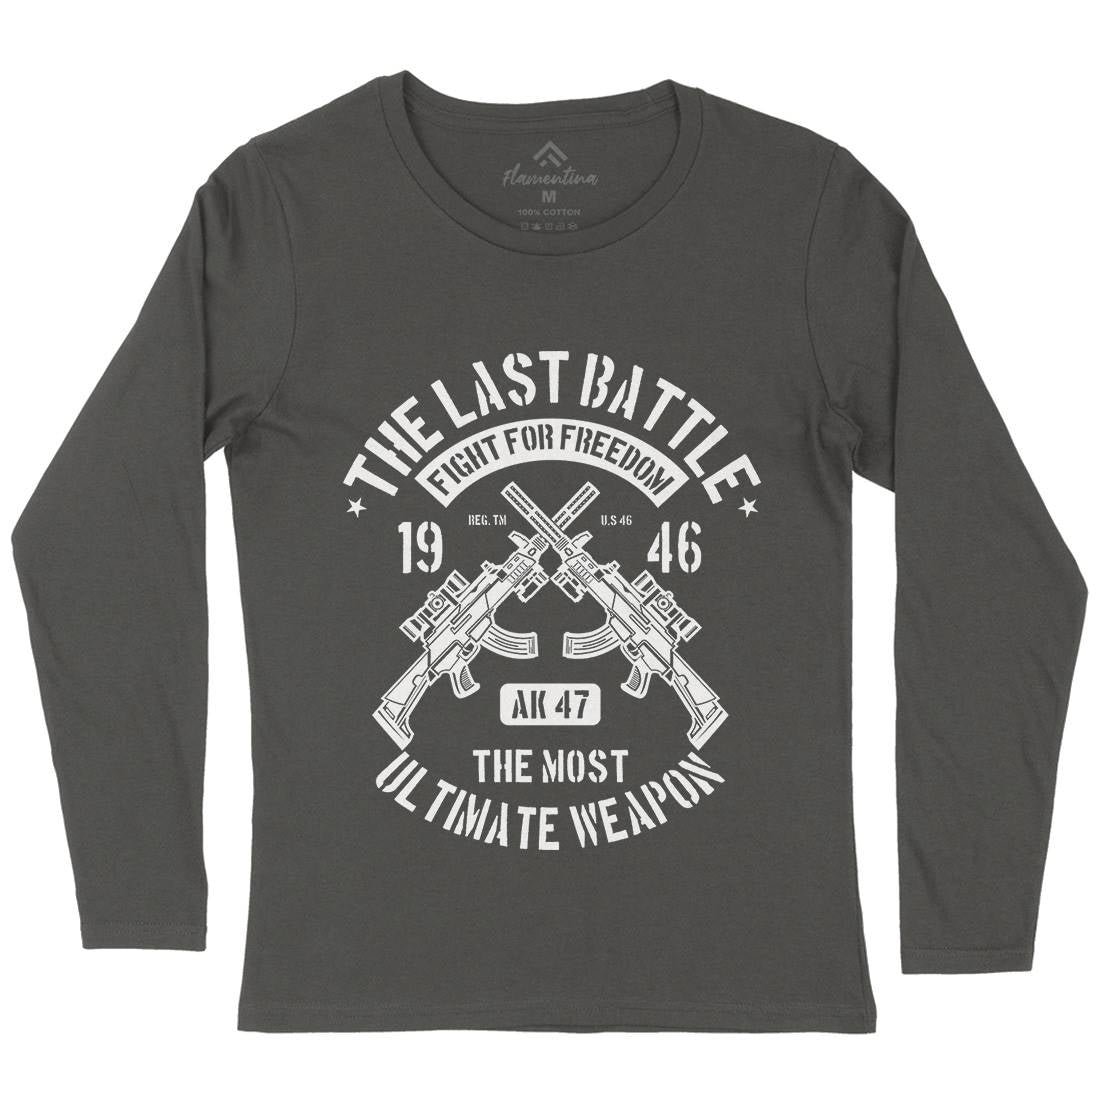 Last Battle Womens Long Sleeve T-Shirt Army A174